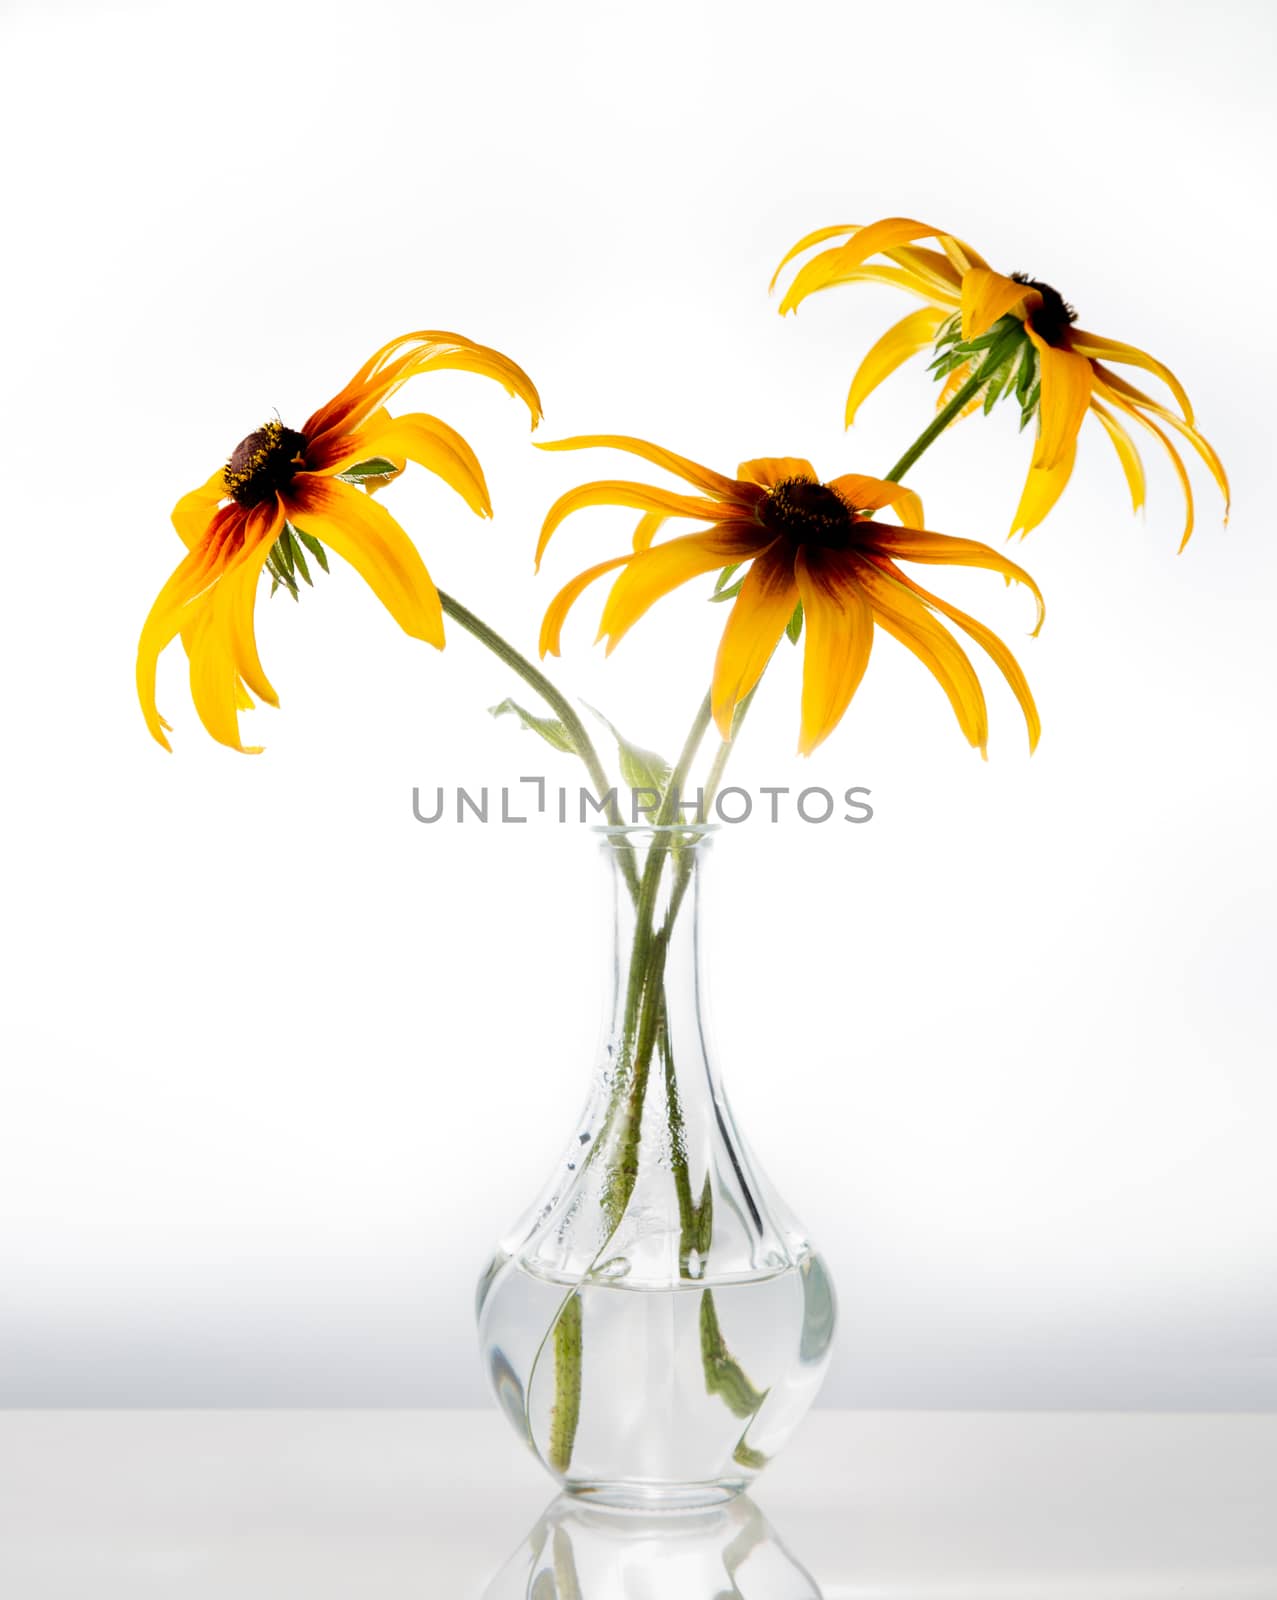 Orange gardens daisies rudbeckia Black-Eyed Susan flowers in a vase  by galinasharapova